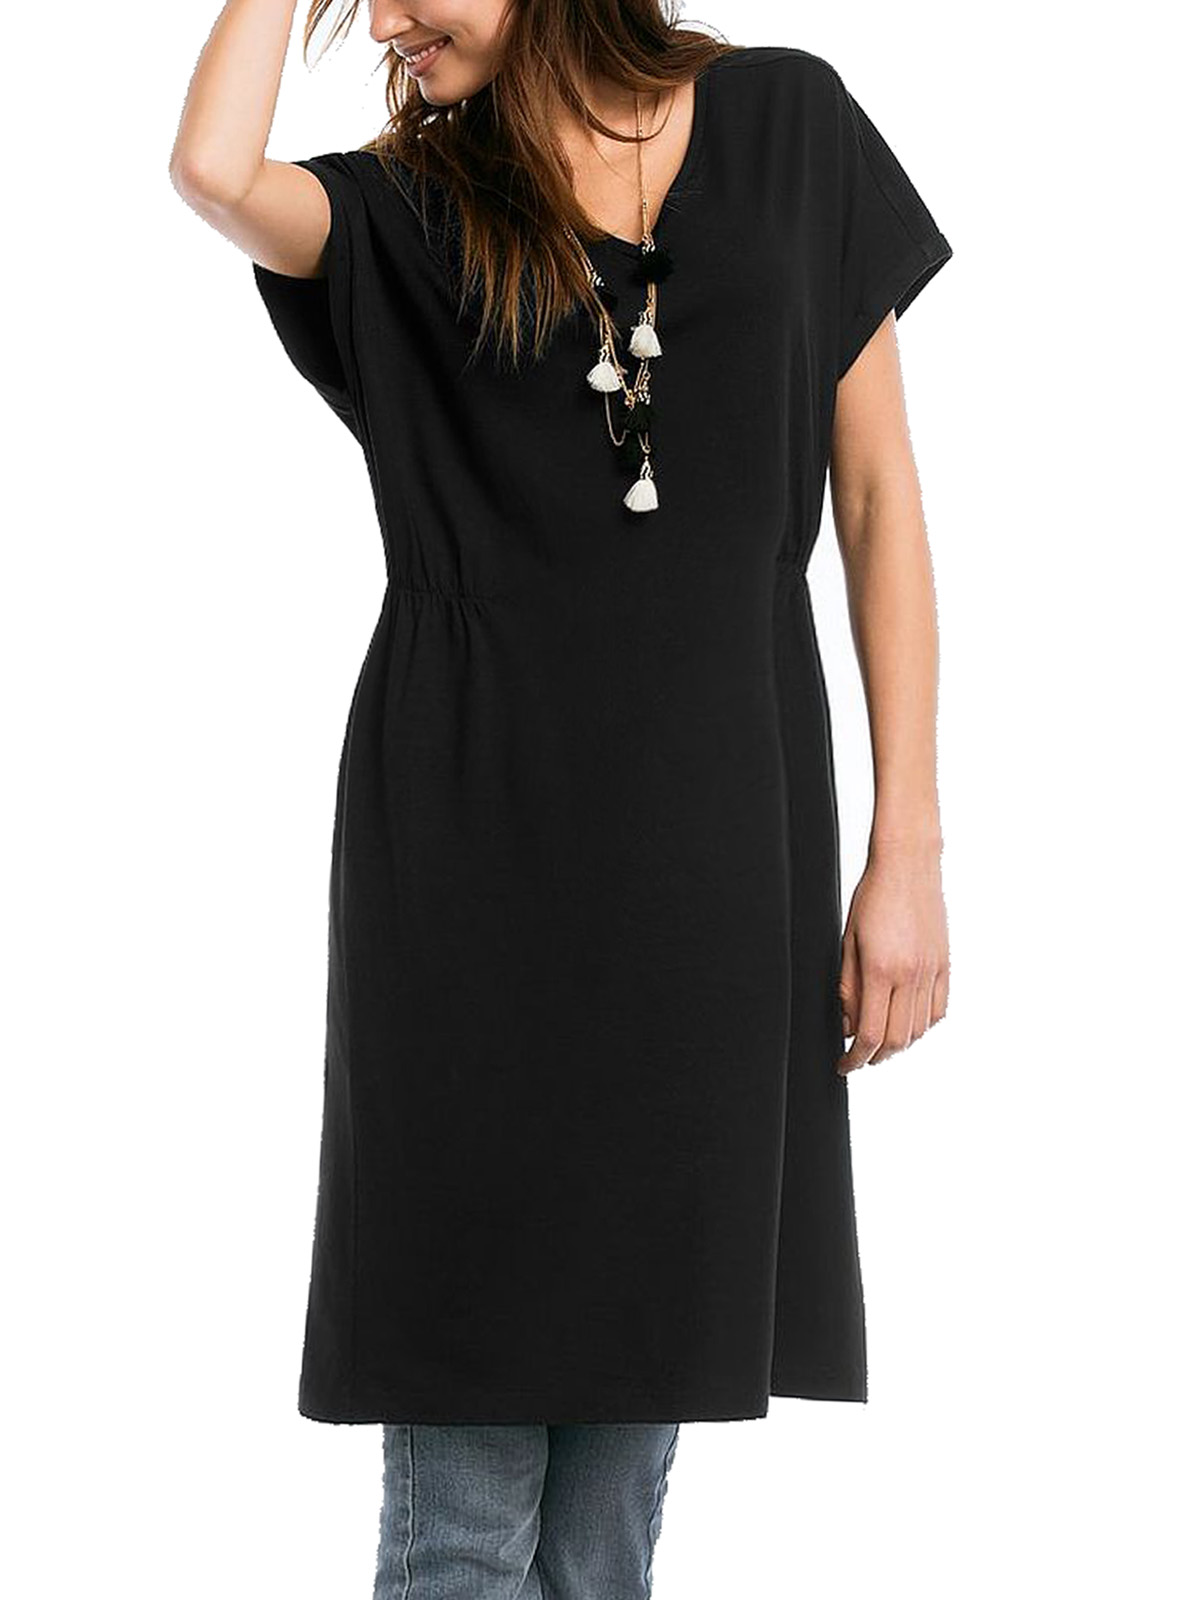 Ellos - - Ellos BLACK Pure Cotton Short Sleeve Dress - Size 12/14 (EU ...